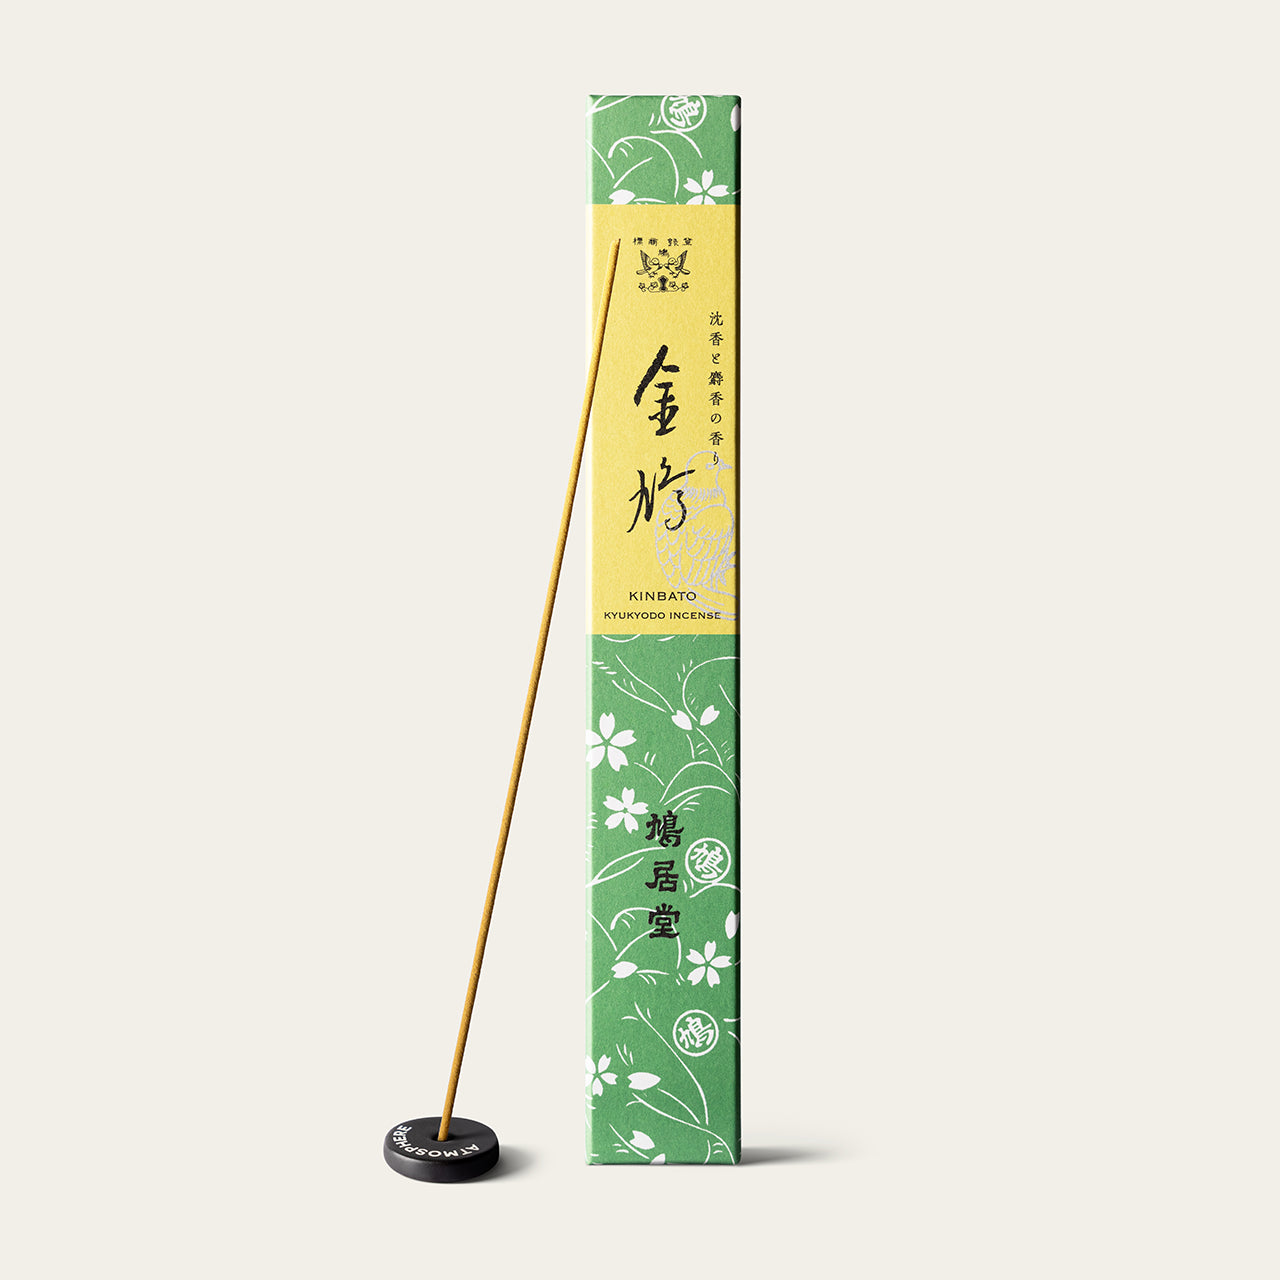 Kyukyodo Golden Pigeon Kinbato 17cm Japanese incense sticks (60 sticks) with Atmosphere ceramic incense holder